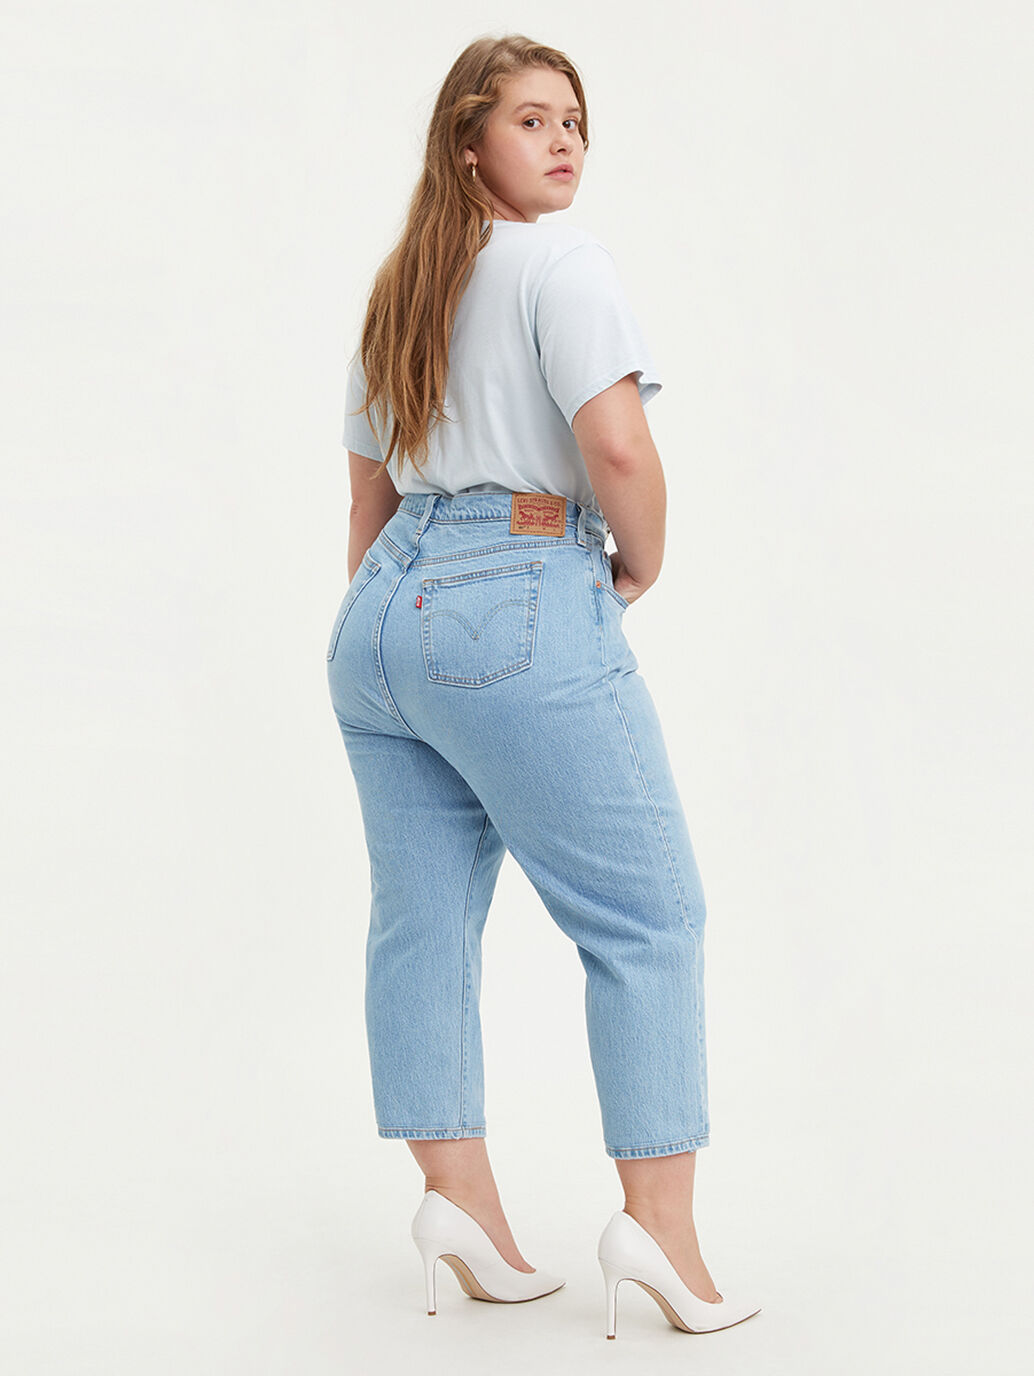 best levi jeans for curvy women